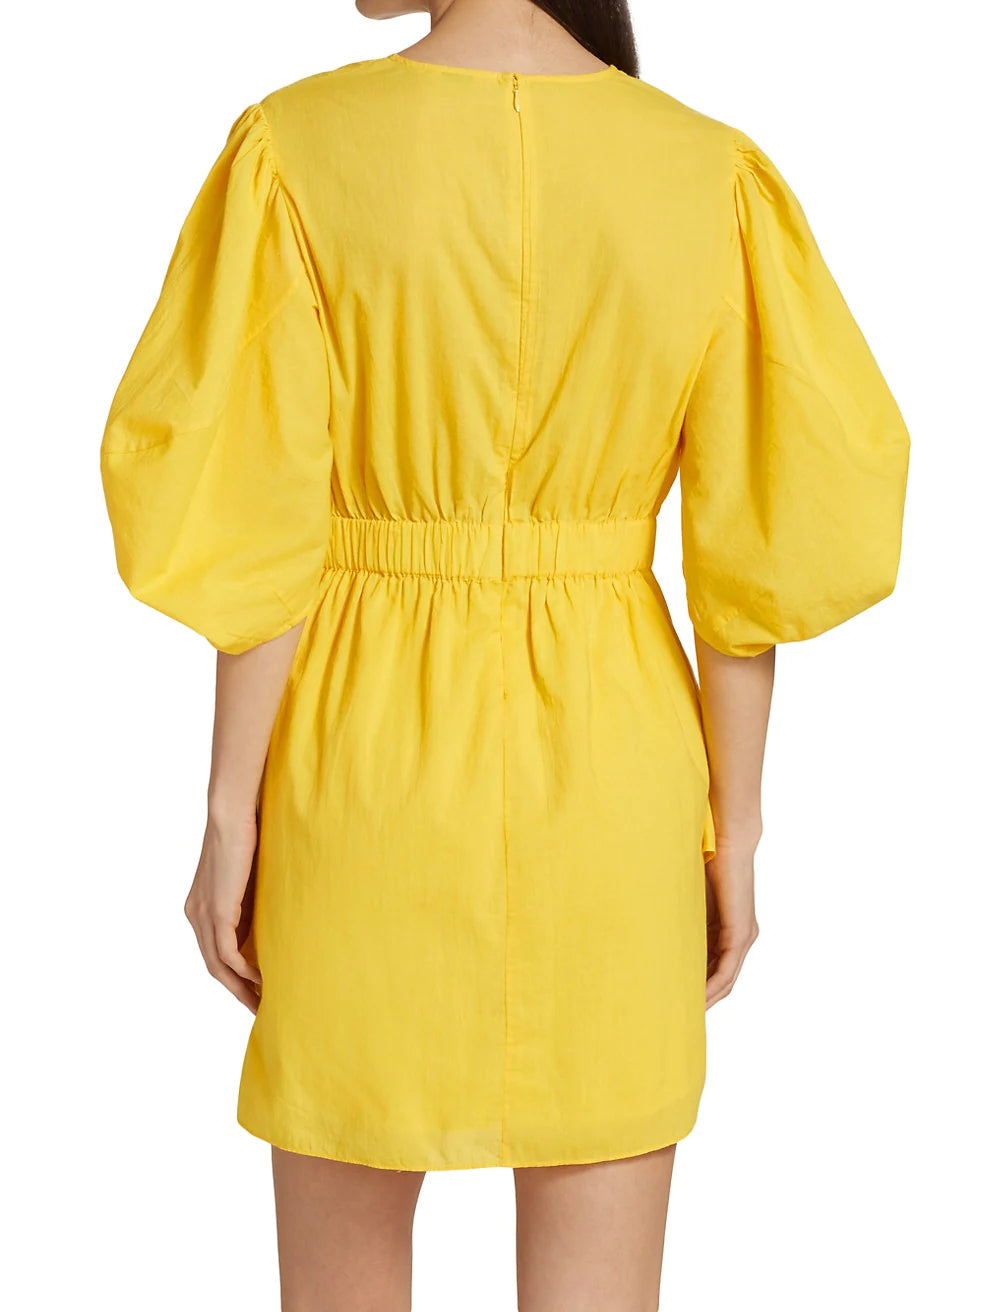 Rhode Pia Dress in Super Lemon